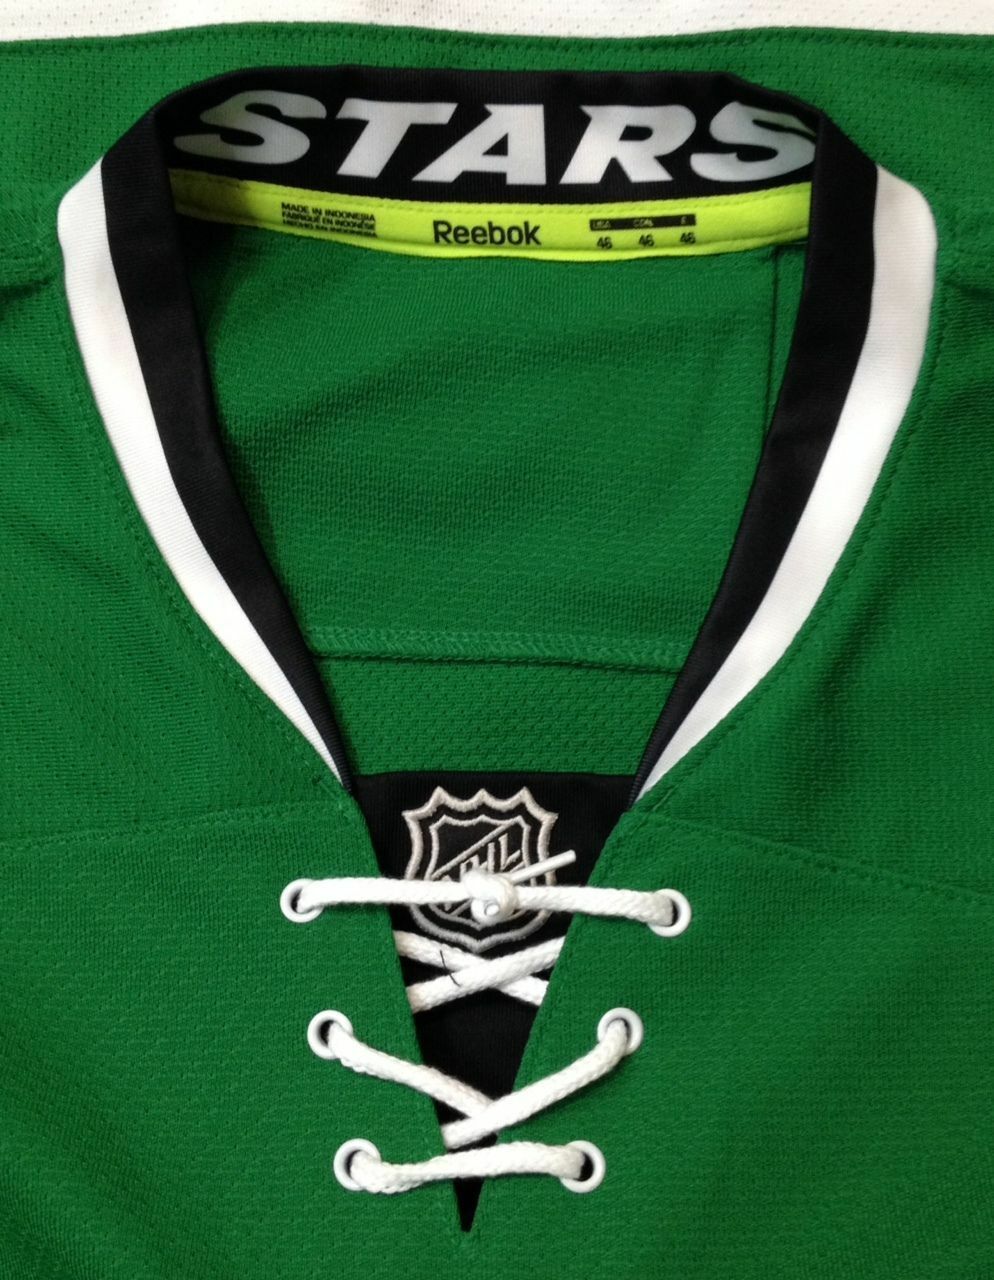 DALLAS STARS reebok NHL authentic genuine stitched hockey jersey green 46 Image 3